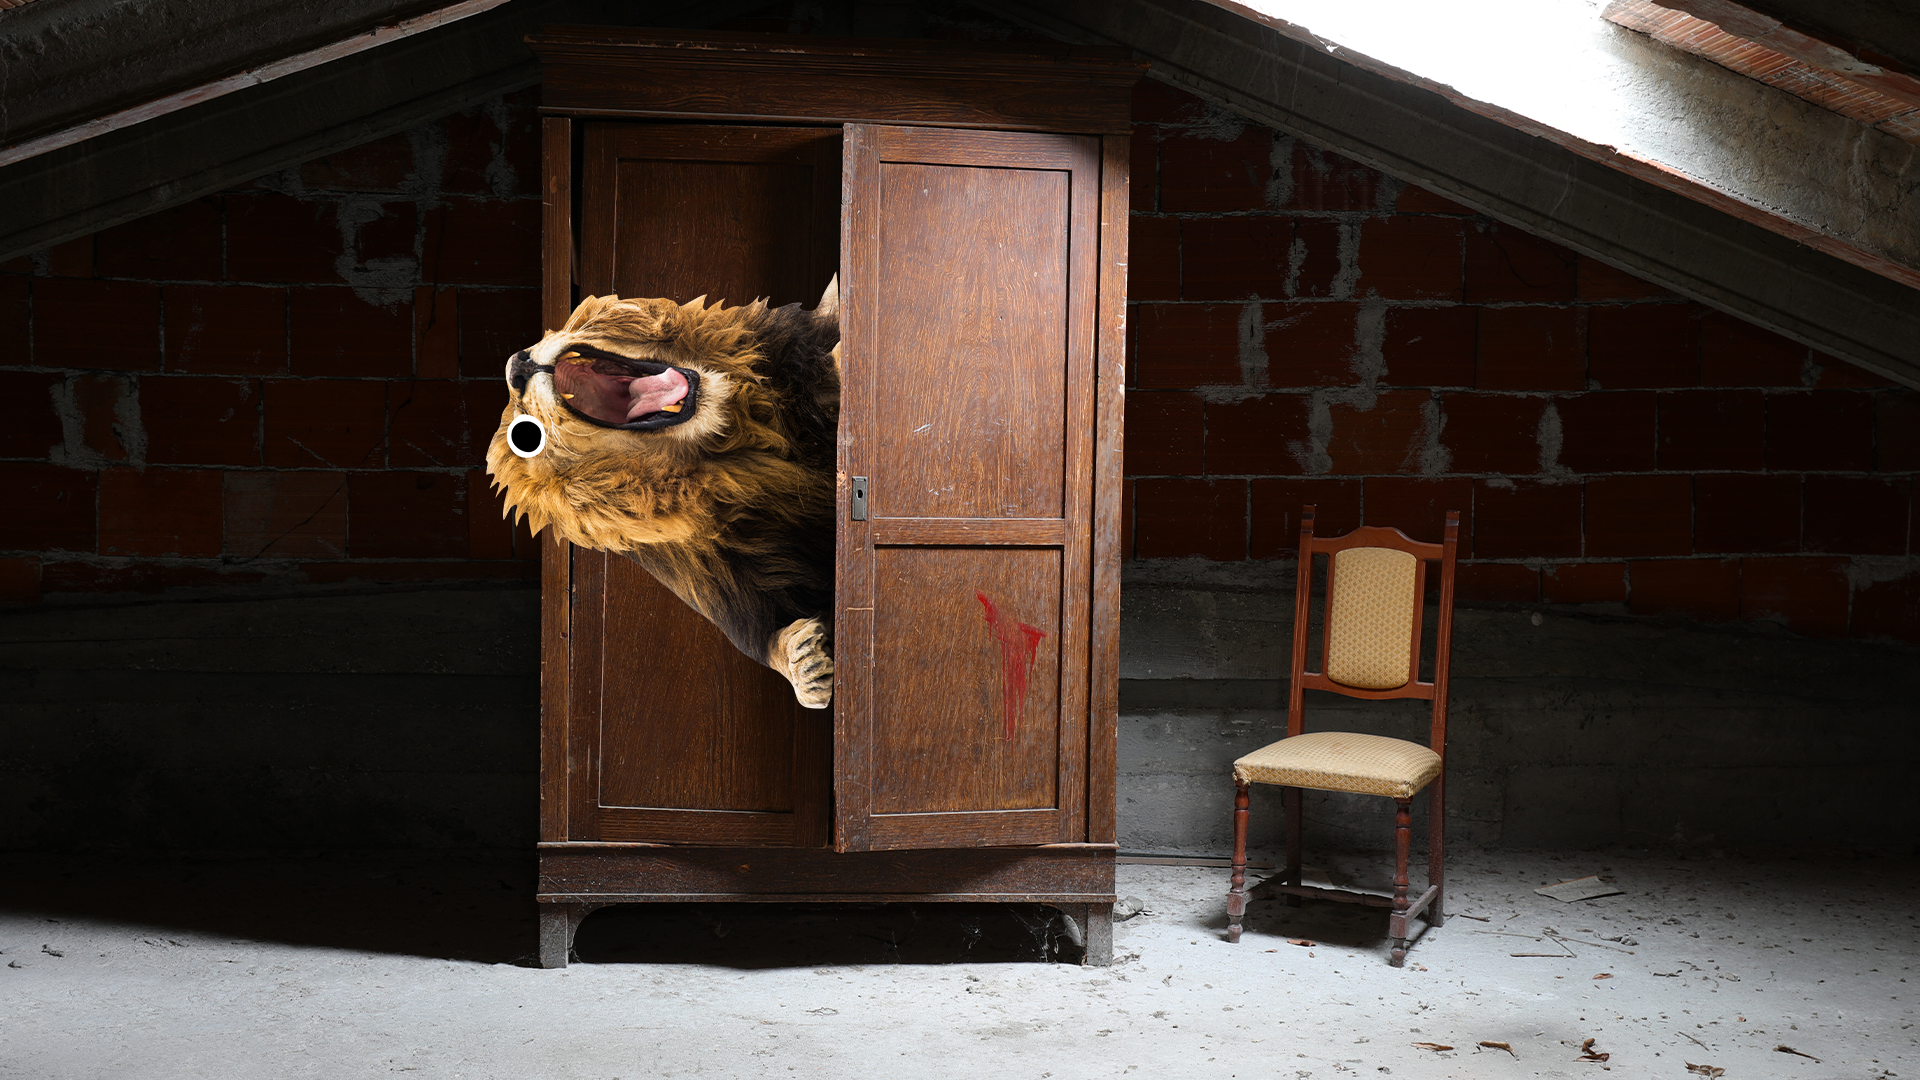 Beano lion peeking out of a wardrobe